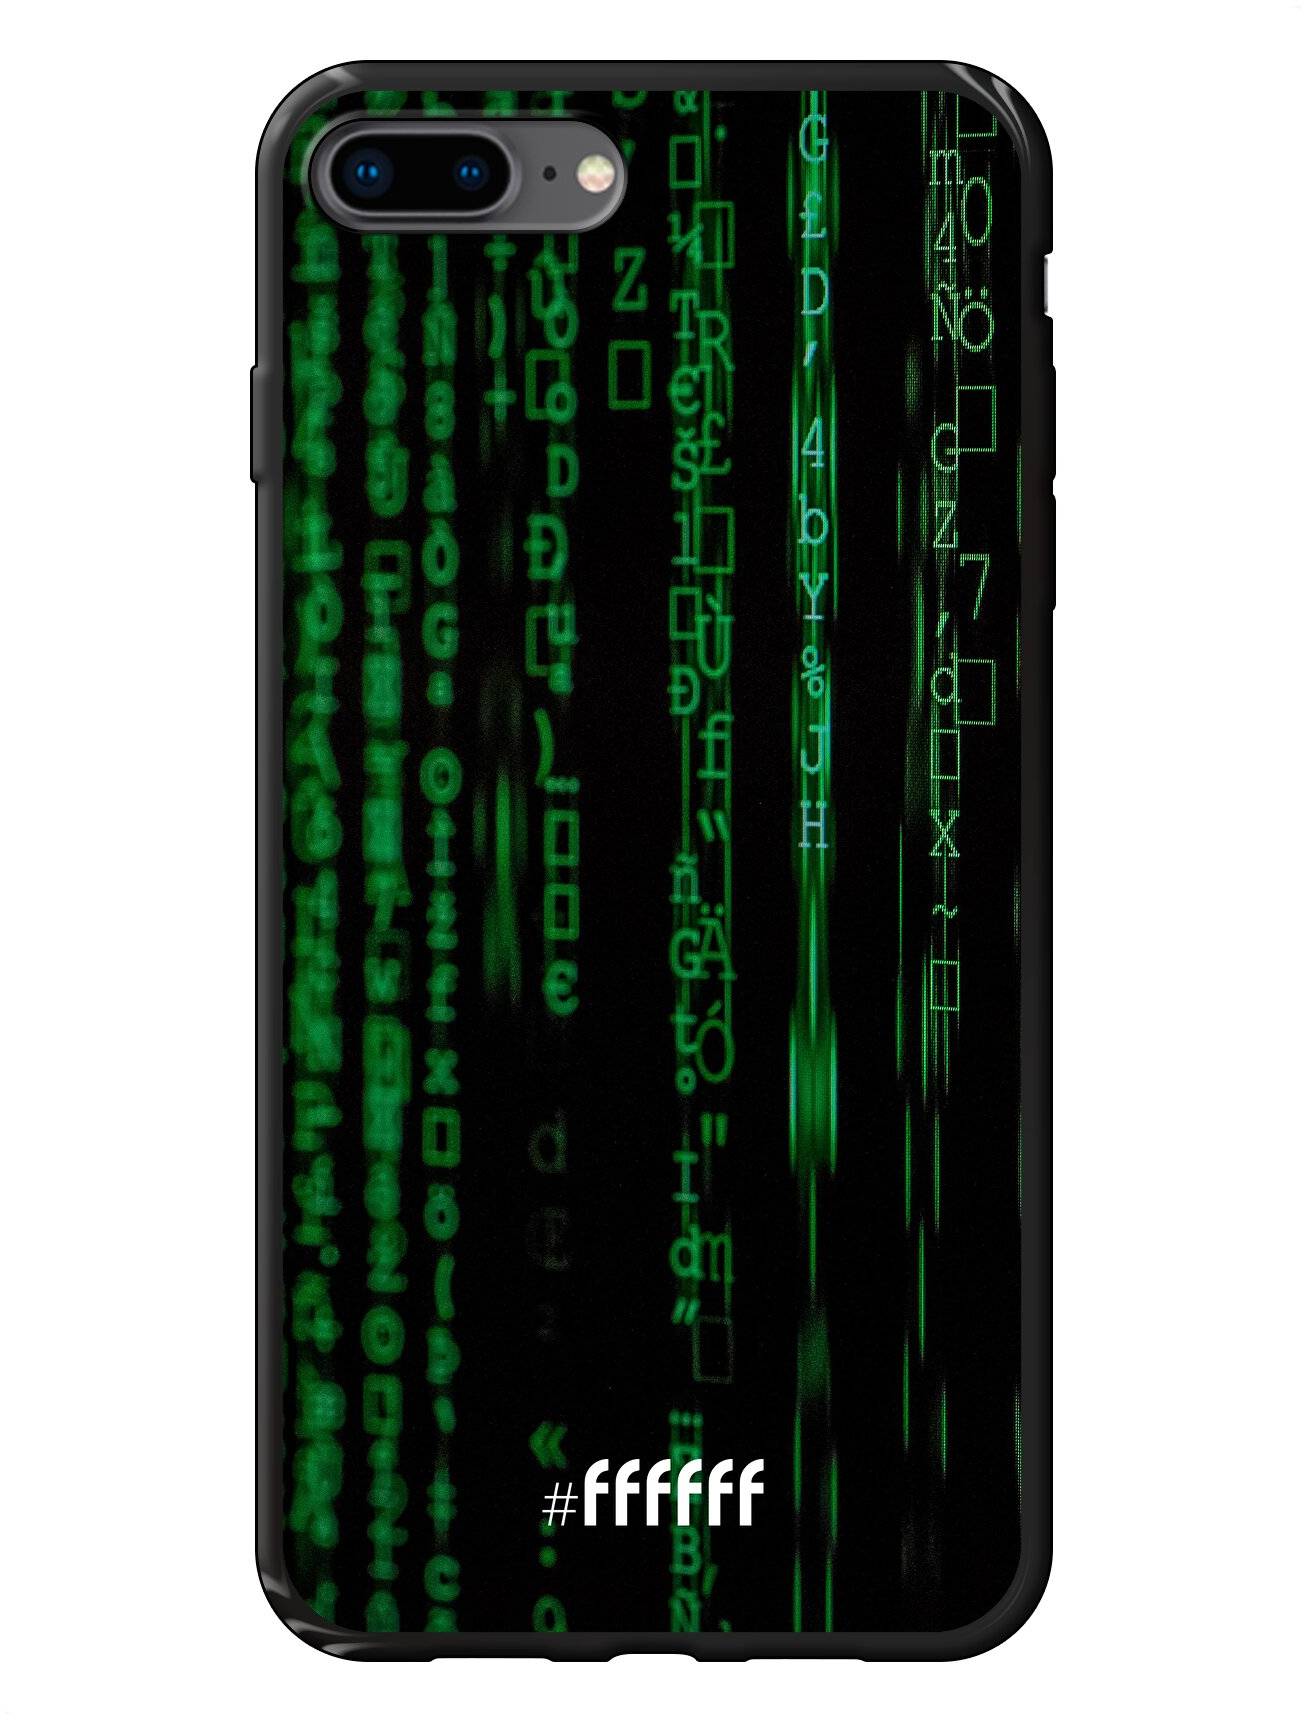 Hacking The Matrix iPhone 7 Plus